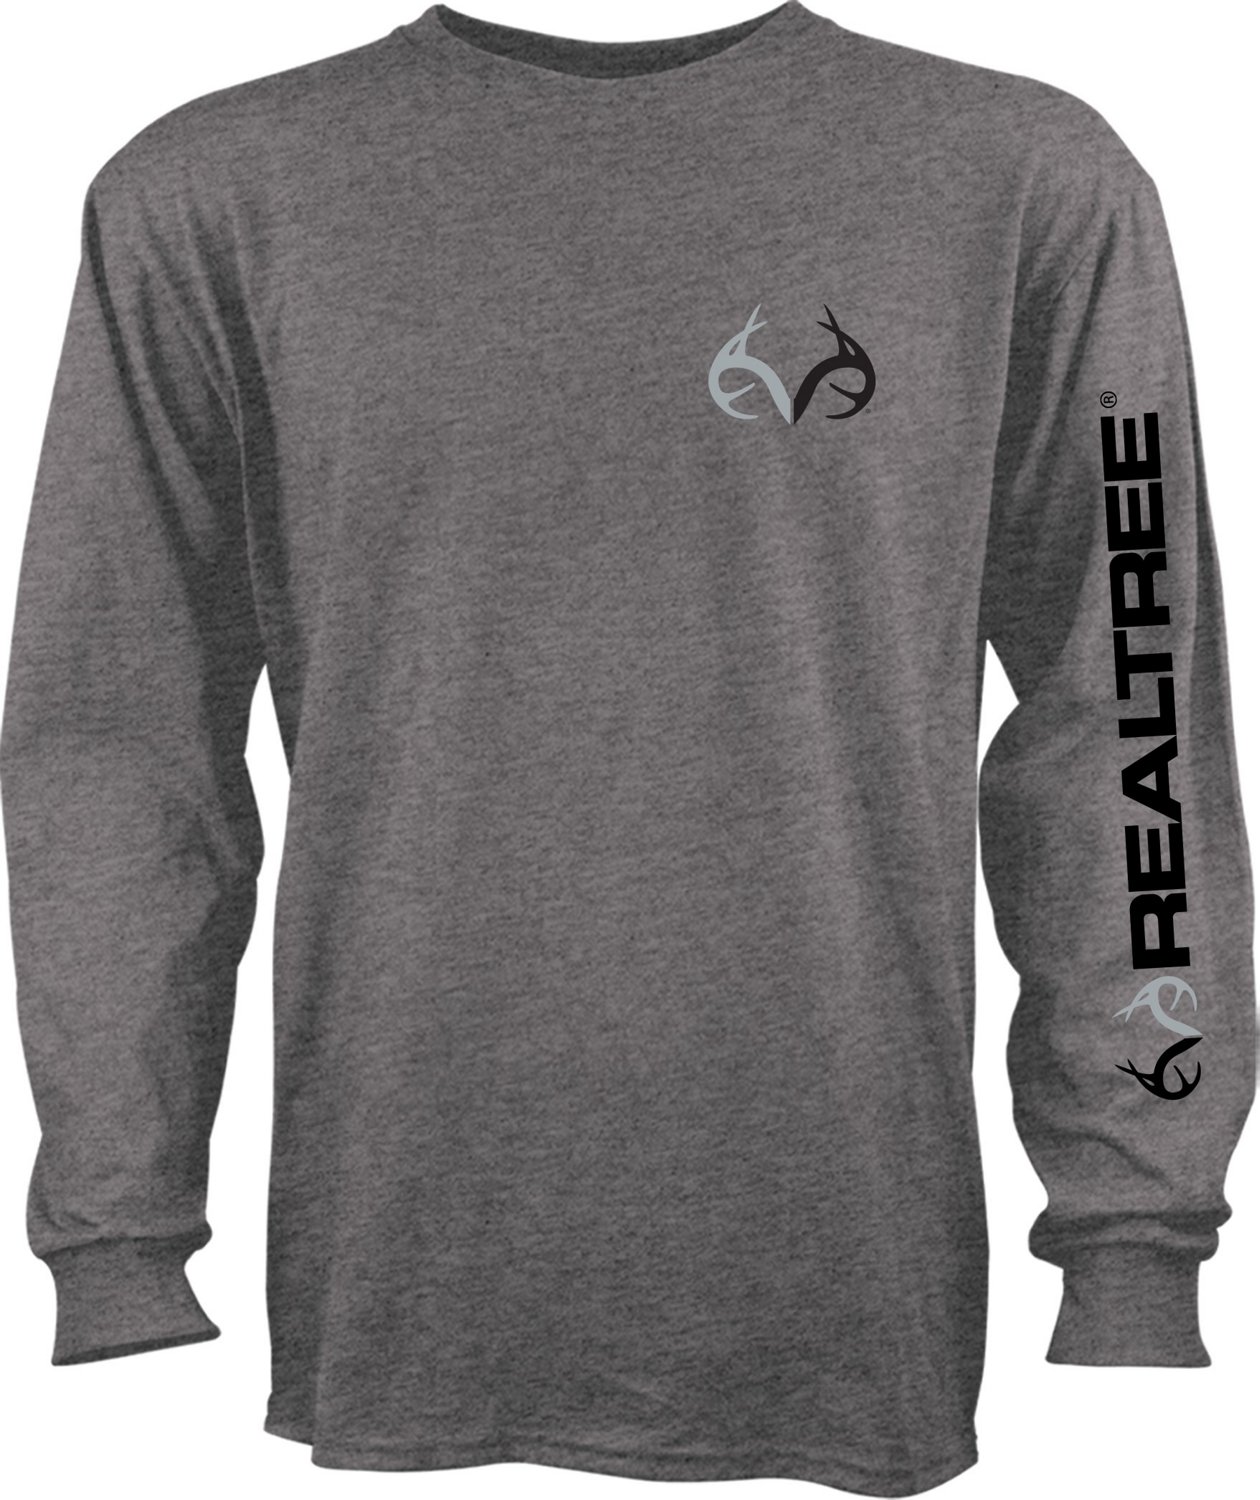 Realtree Men's T-Shirt